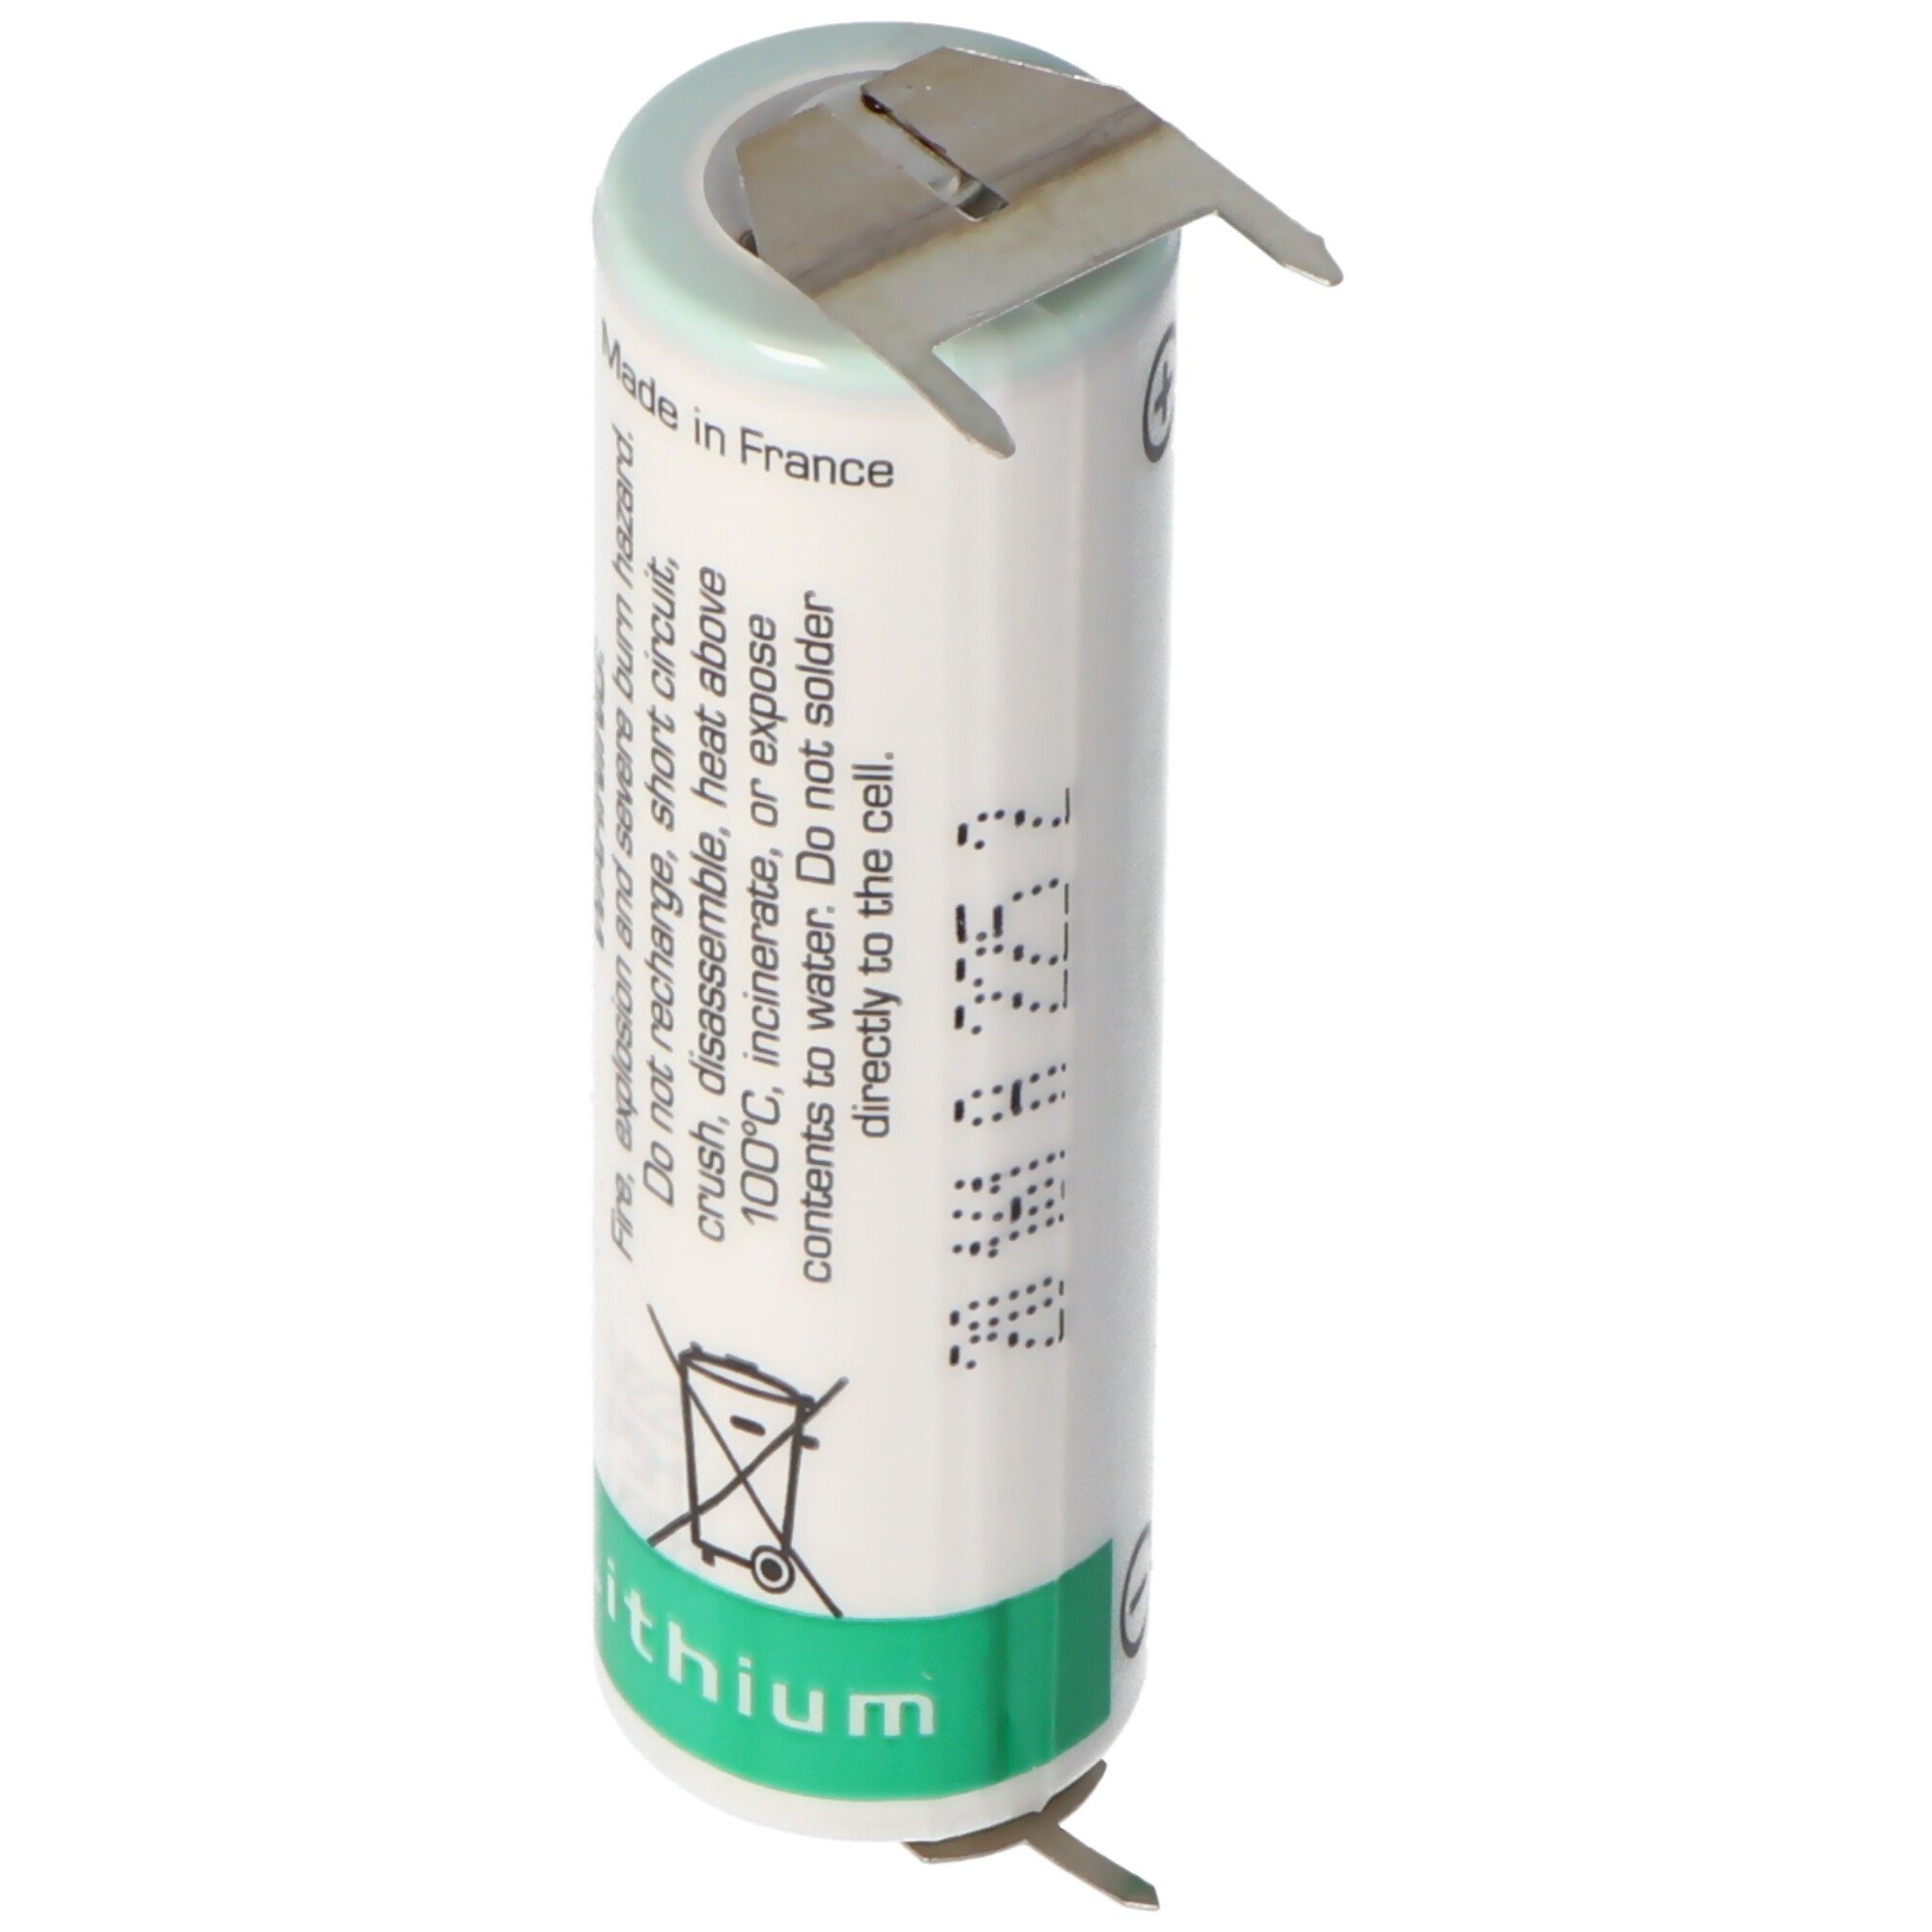 AA Printanschluss, Saft LS14500 mit LS14500 (3,6 3,6 V) Volt Batterie, Saft Ltihium Batterie